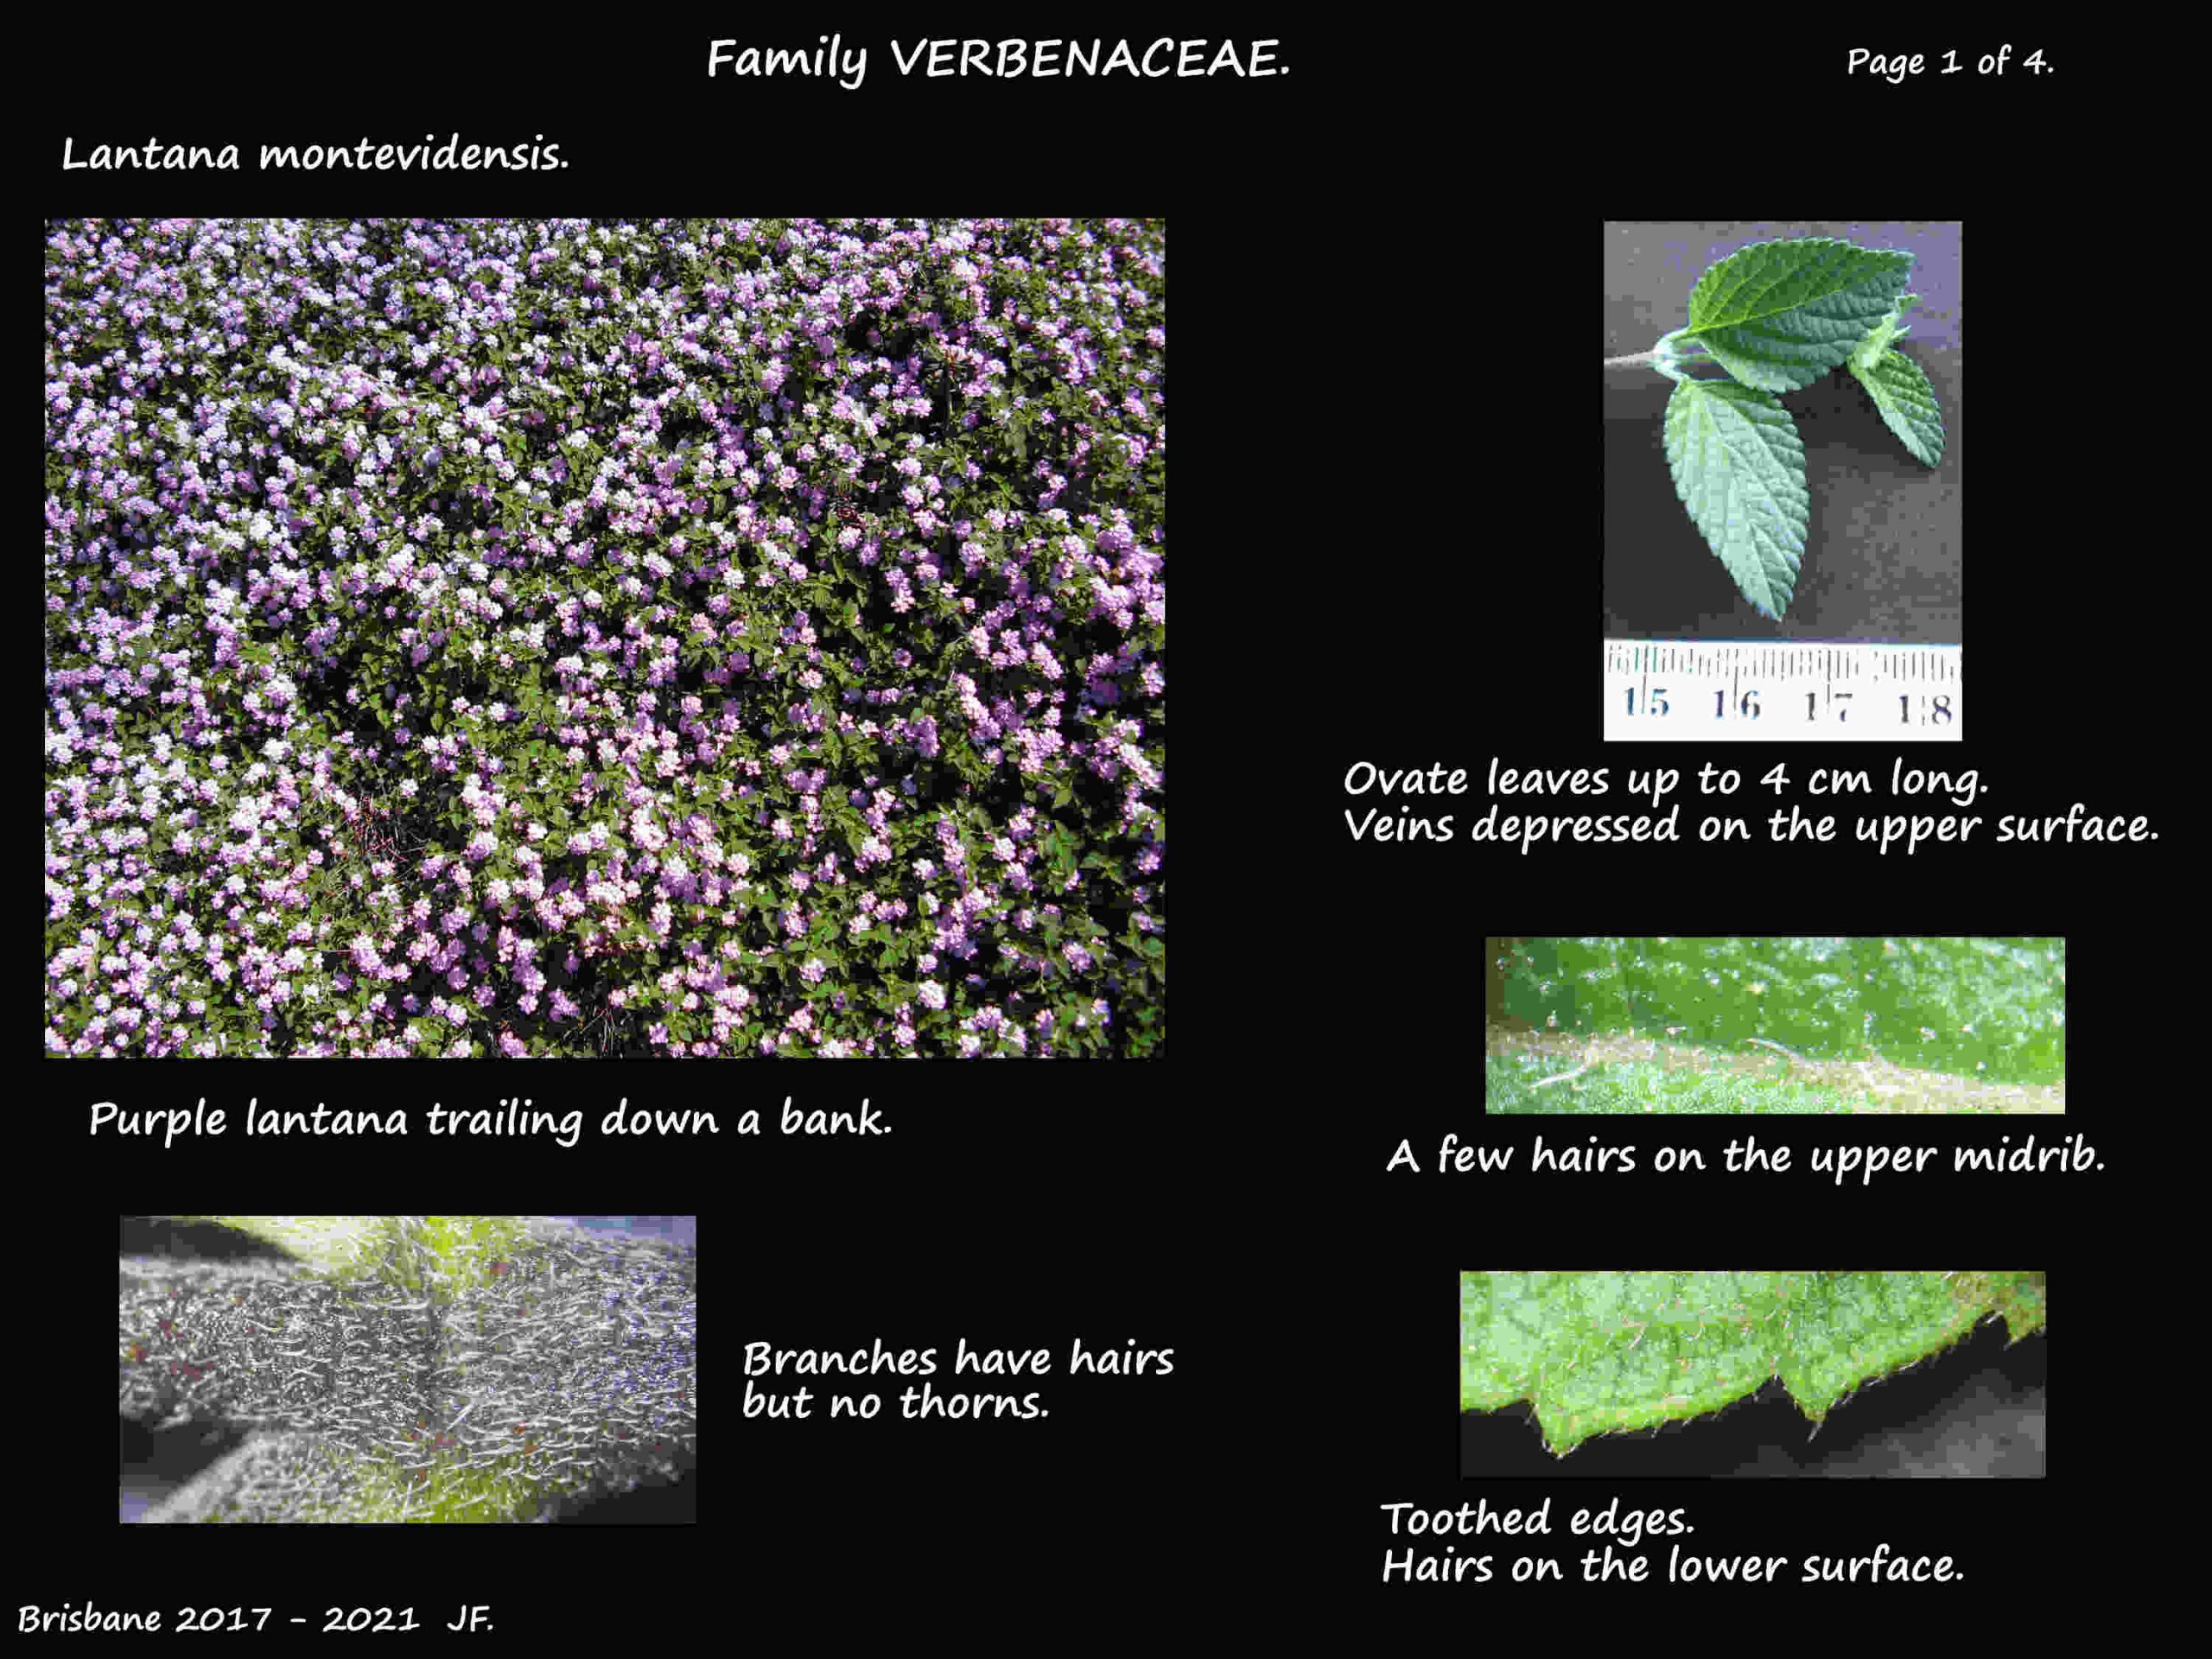 1 Lantana montevidensis plant & leaves